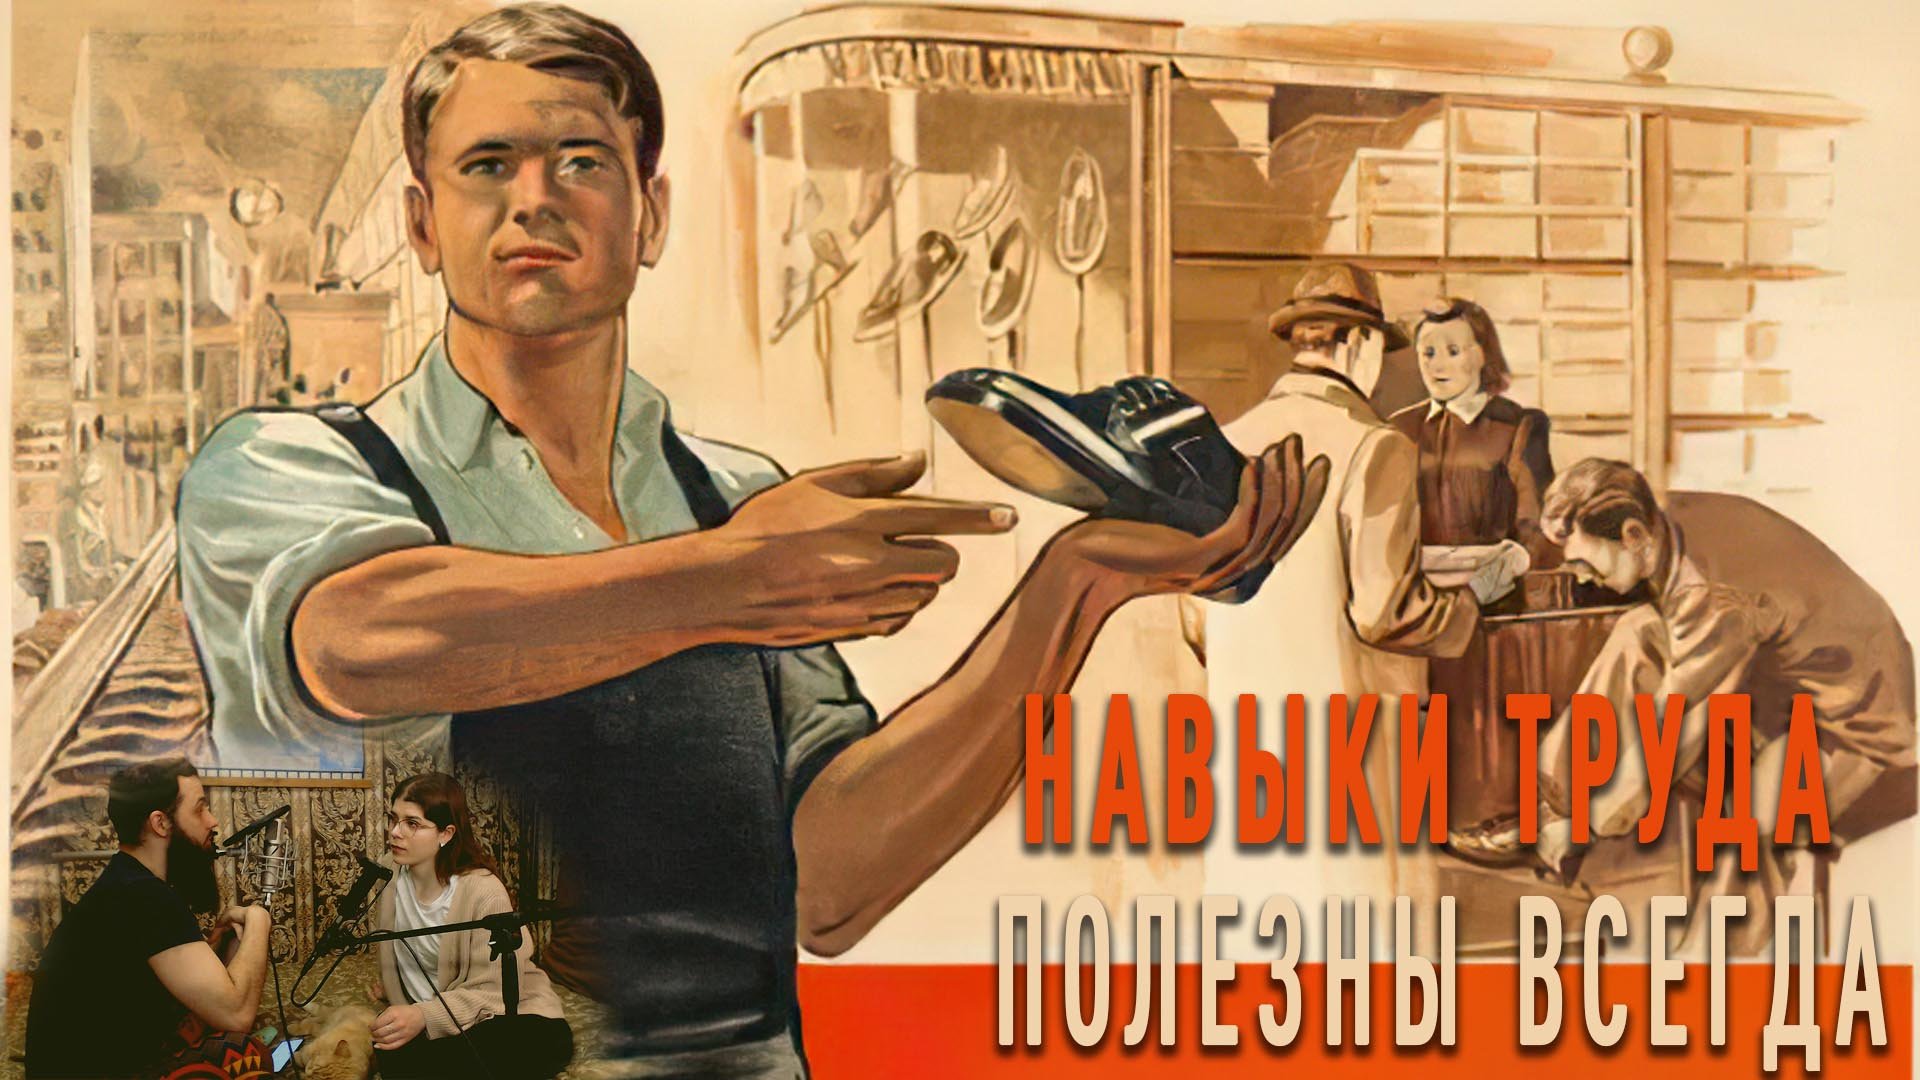 Слоган даешь. Советские плакаты. Советские лозунги и плакаты. Советские трудовые плакаты. Агитационные плакаты советских времен.